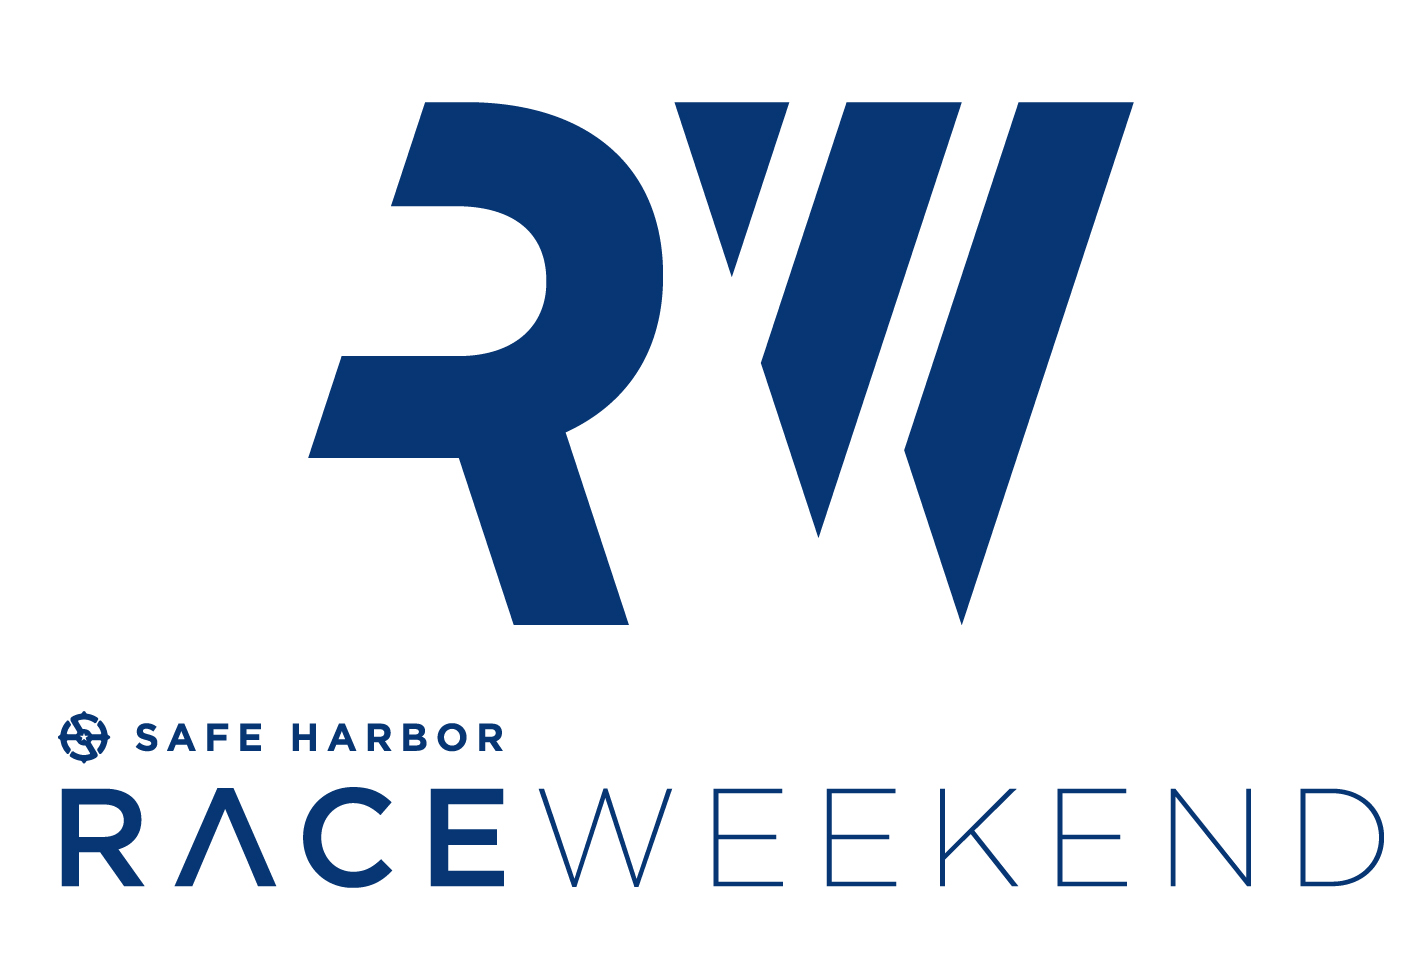 shm-race-weekend-primary-logo-navy-v2